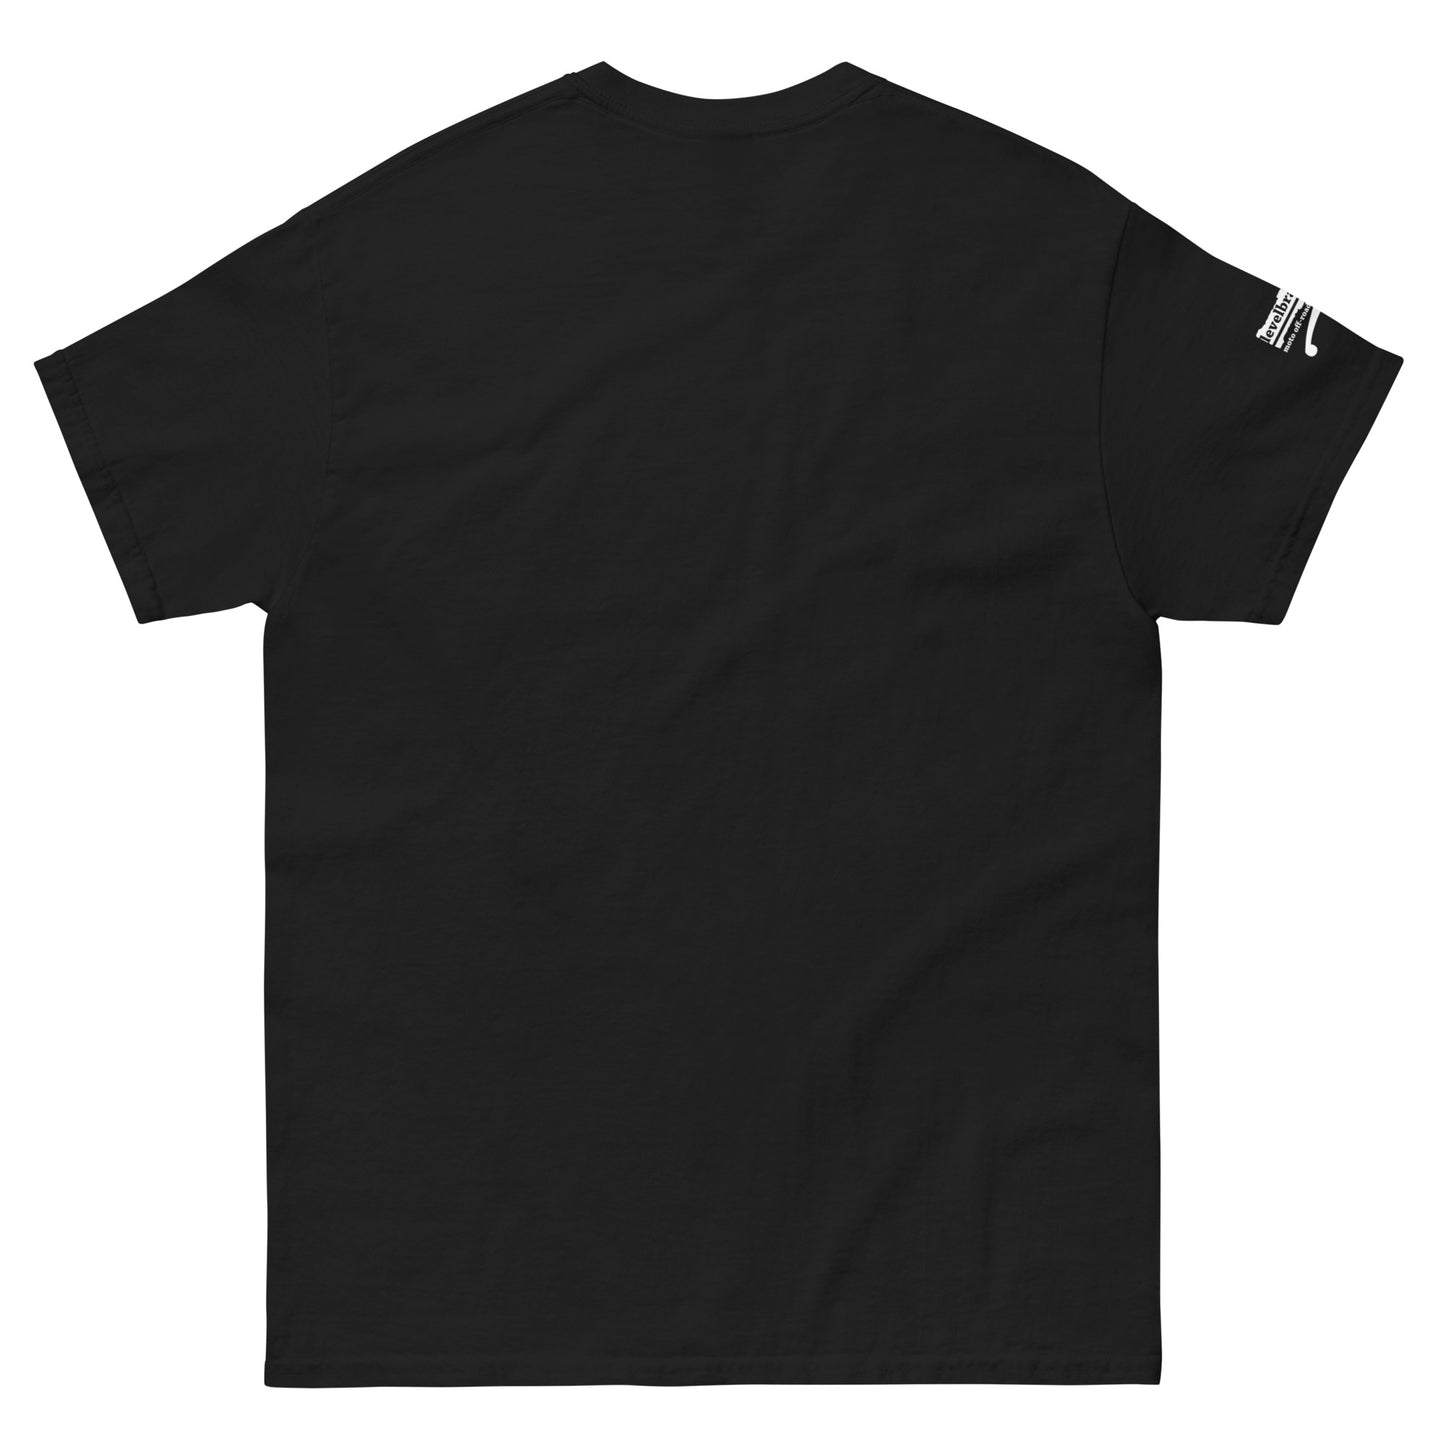 Goldwing unisex black t-shirt